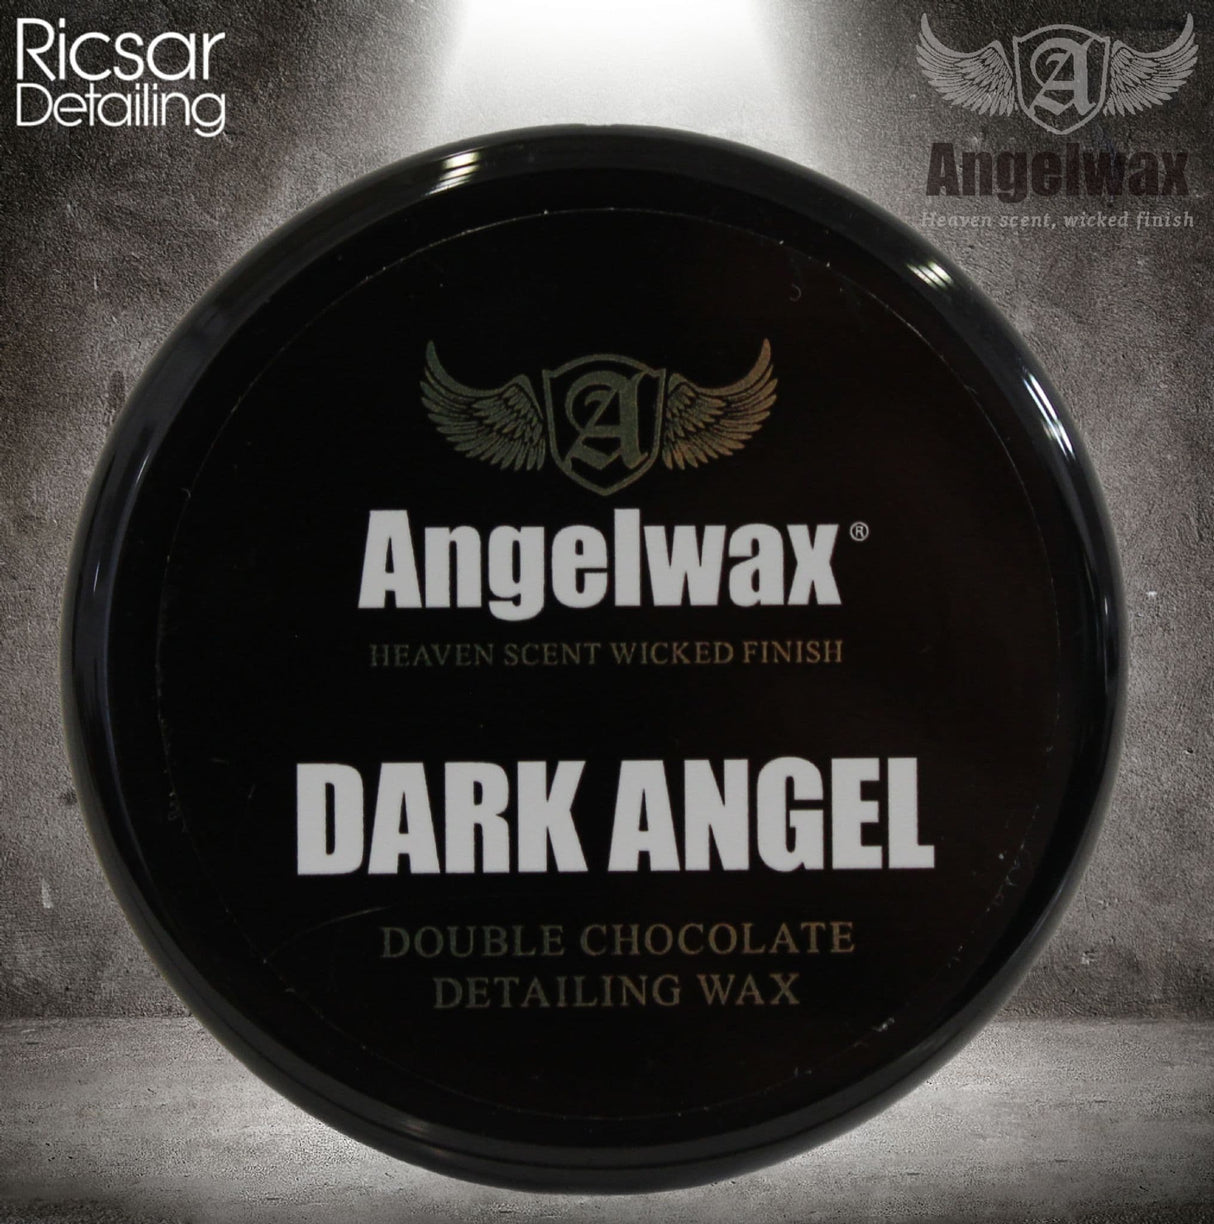 Angelwax Perfect Polish & Dark Angel Wax - Kit